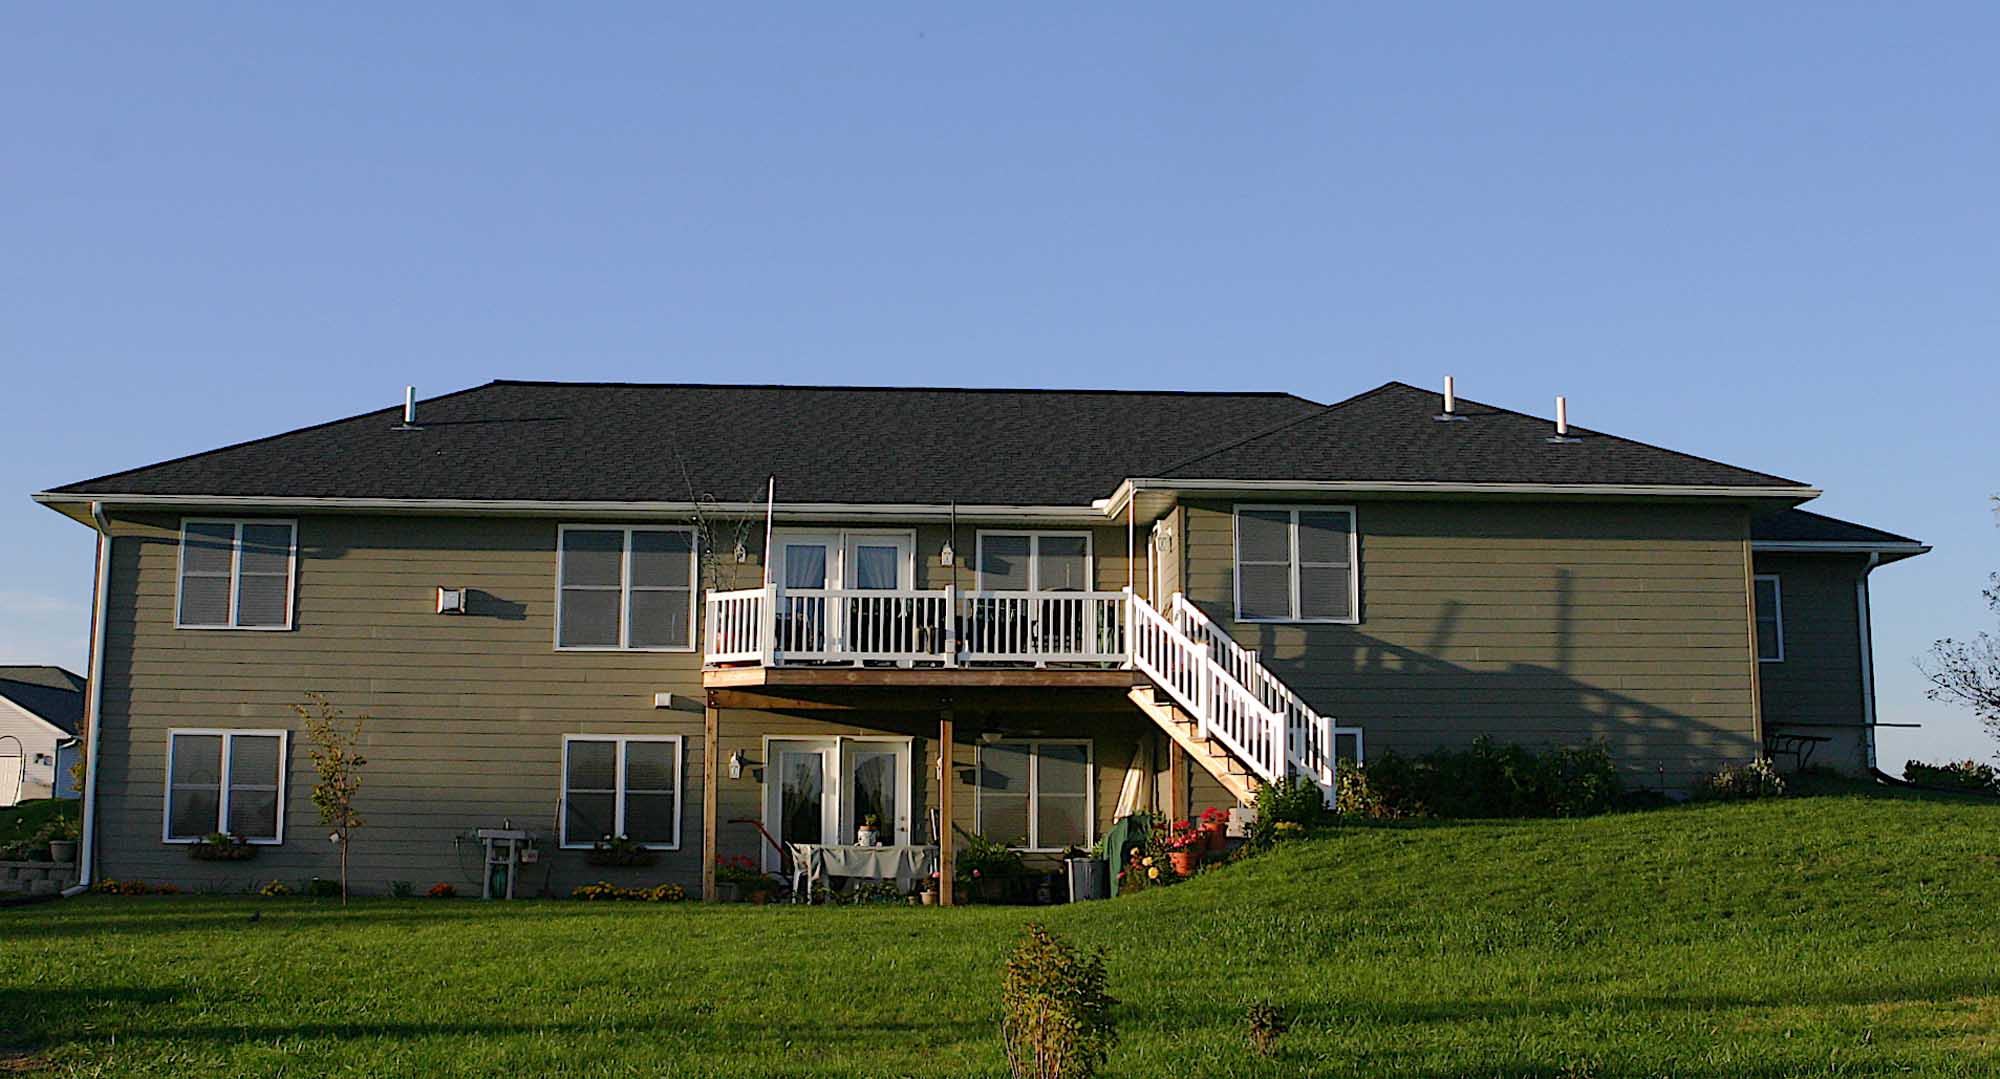 A custom home built in 2006